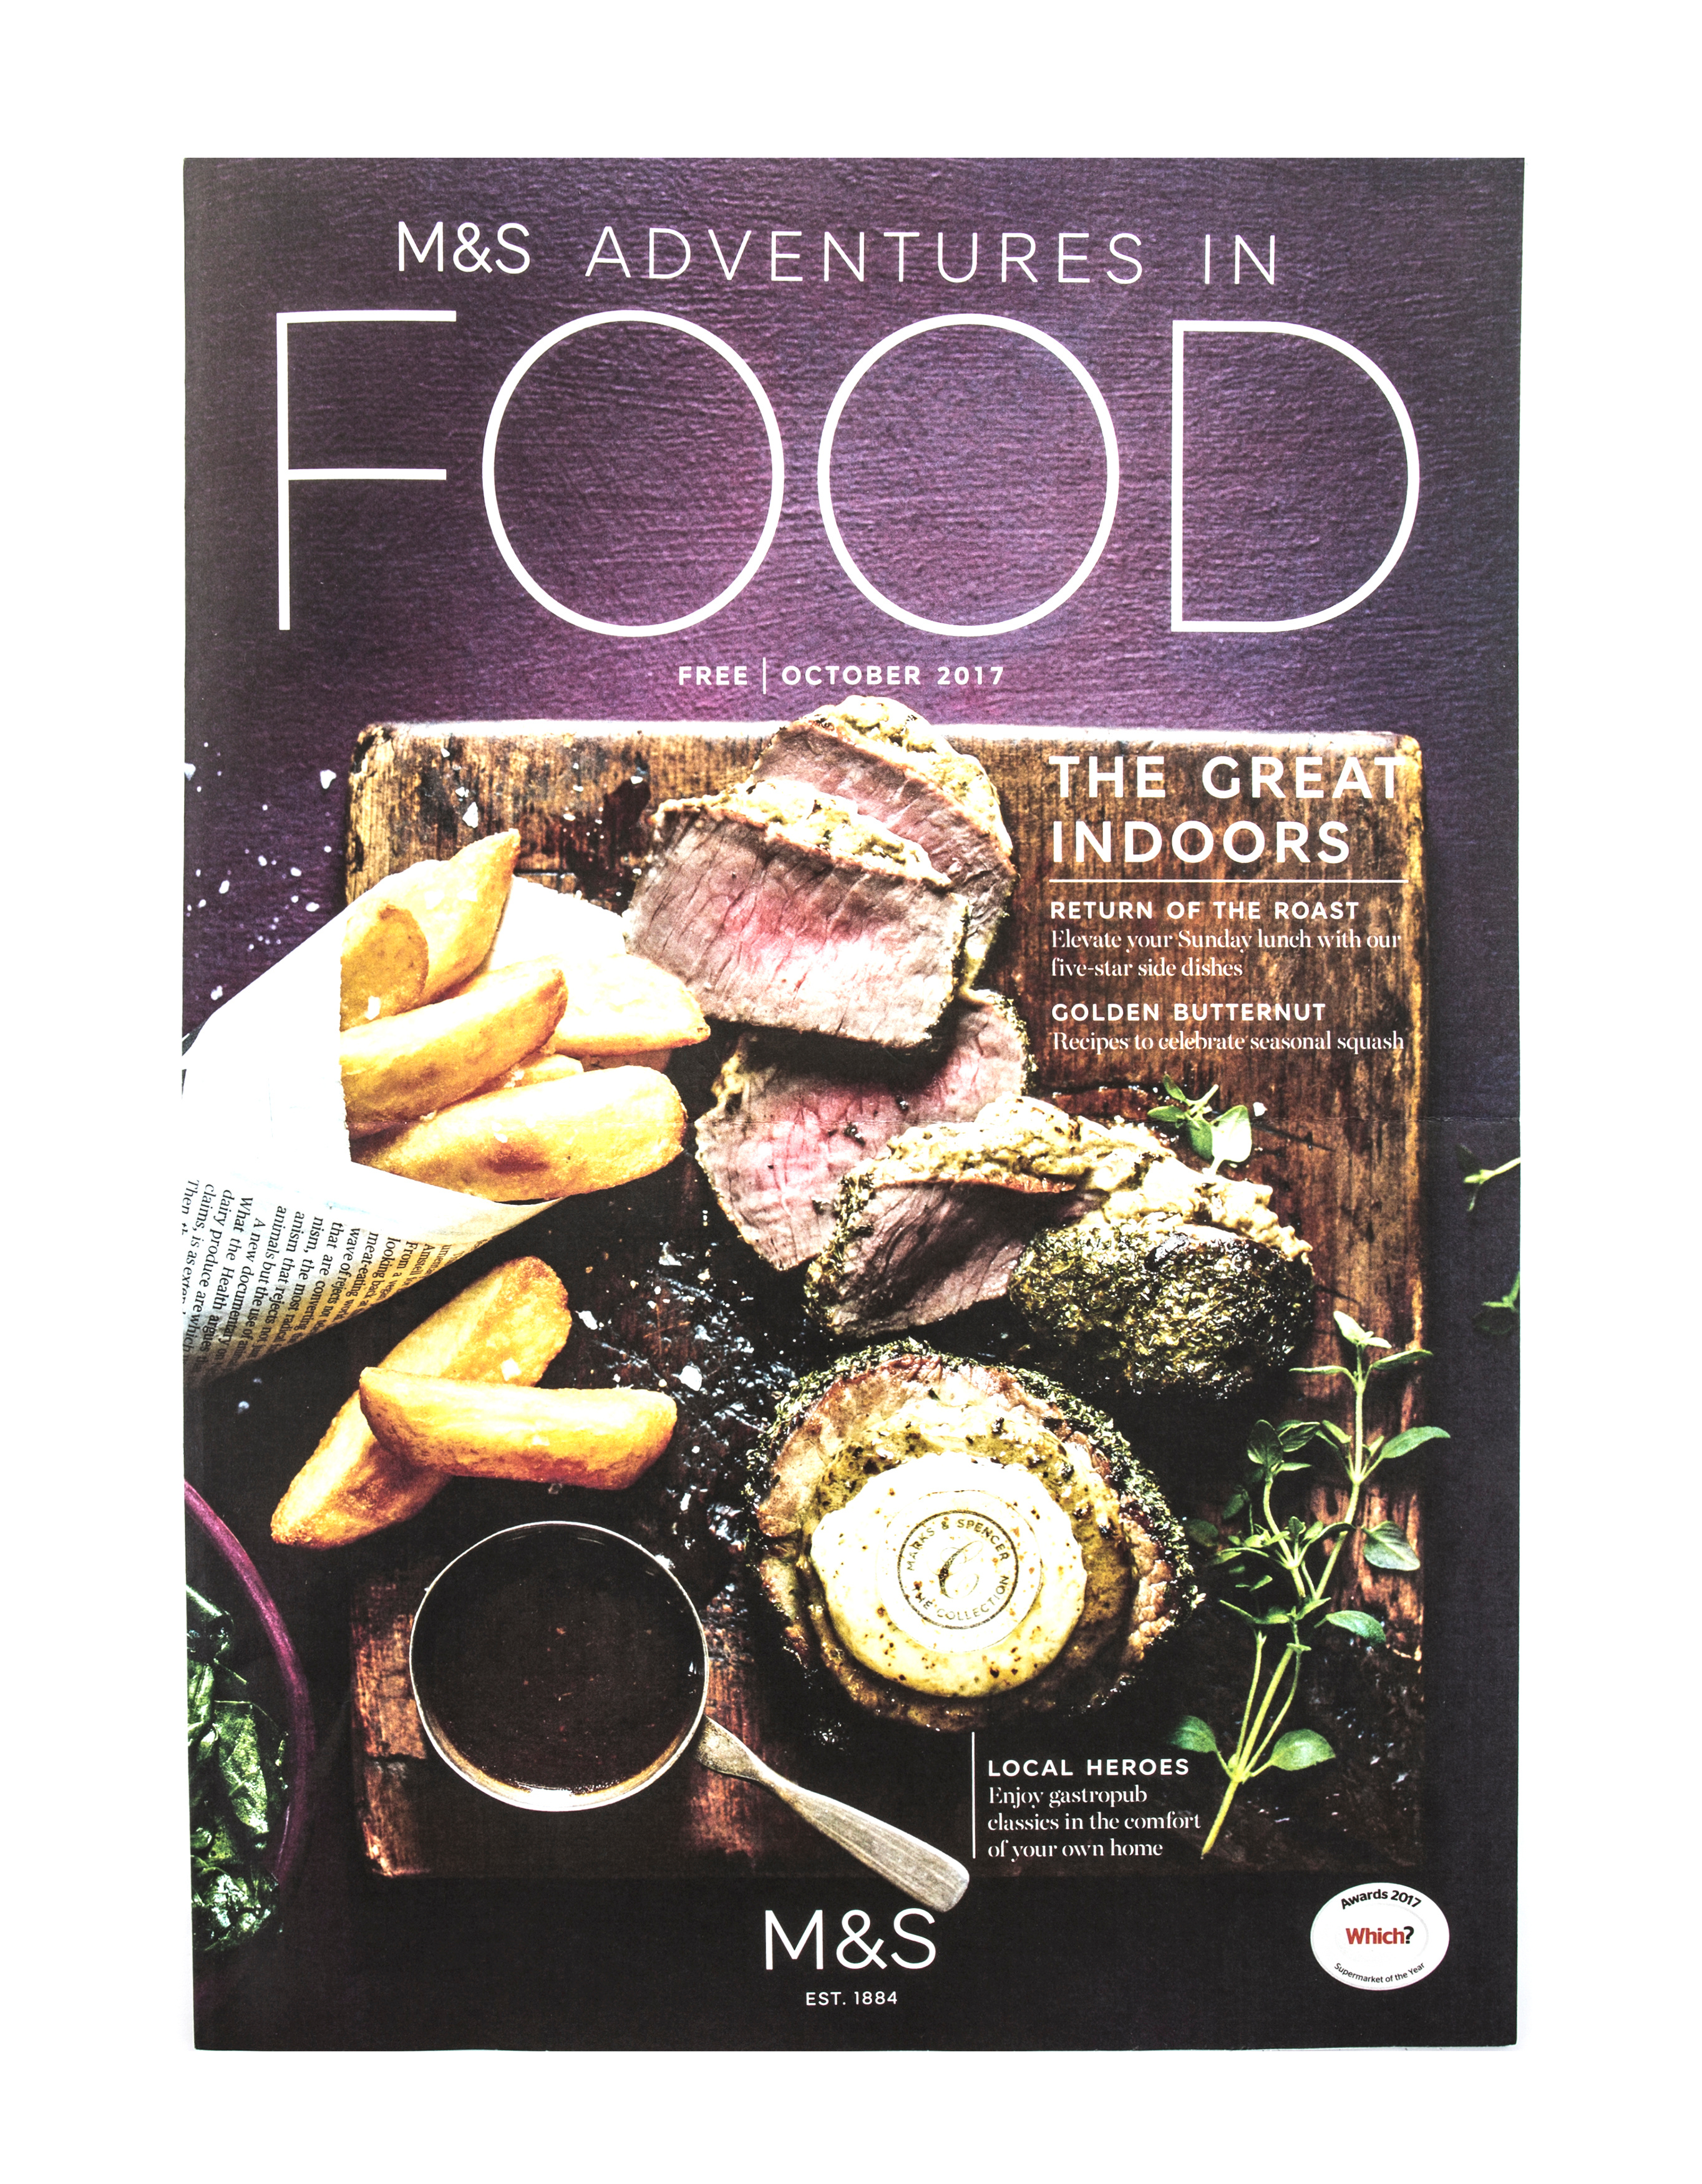 Food magazine cover